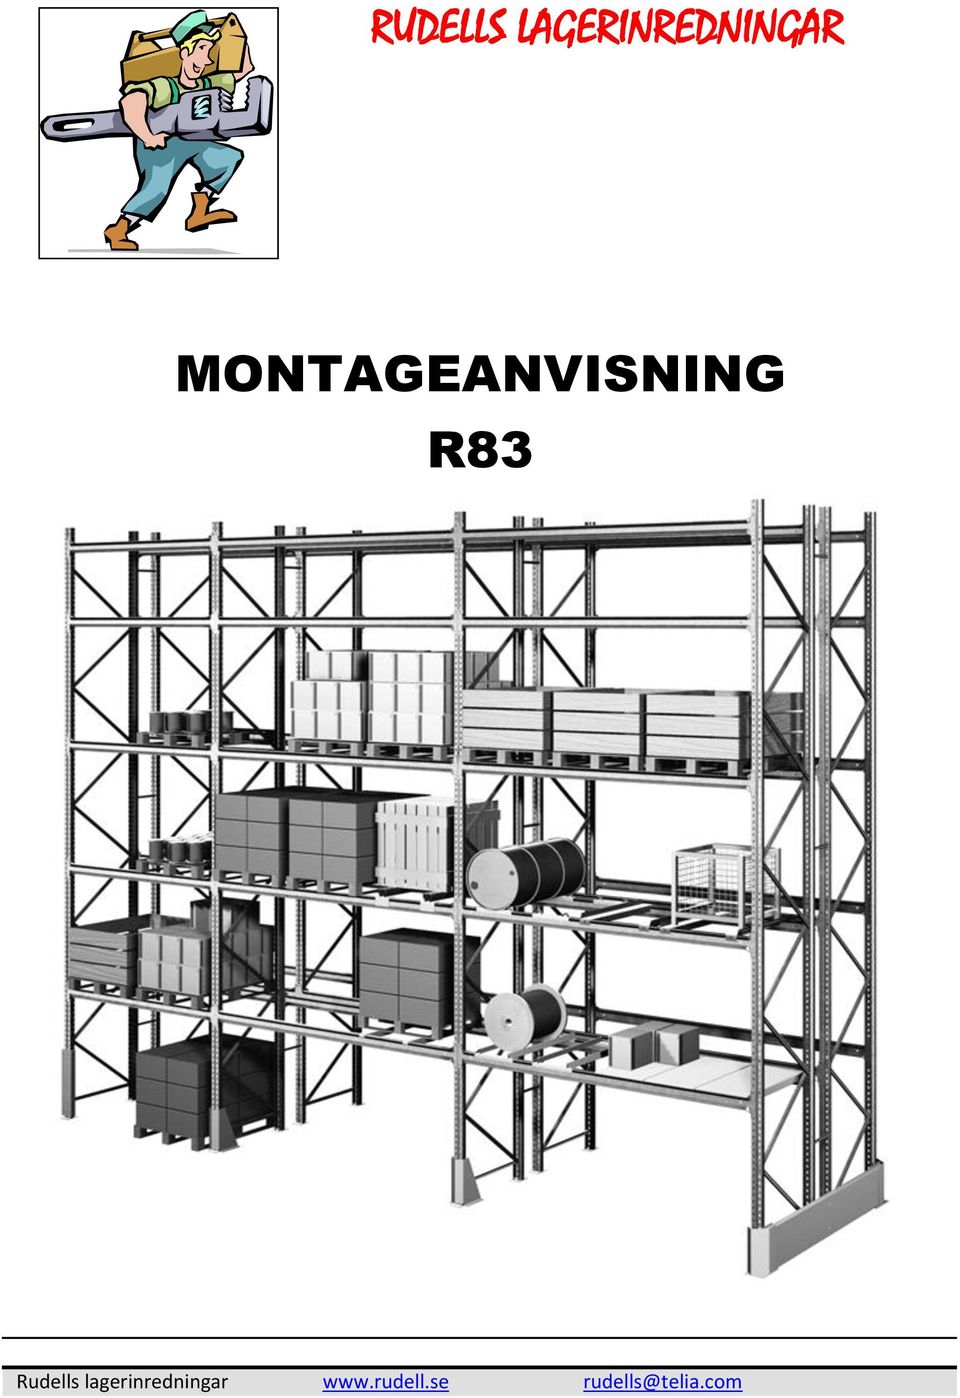 MONTAGEANVISNING R83